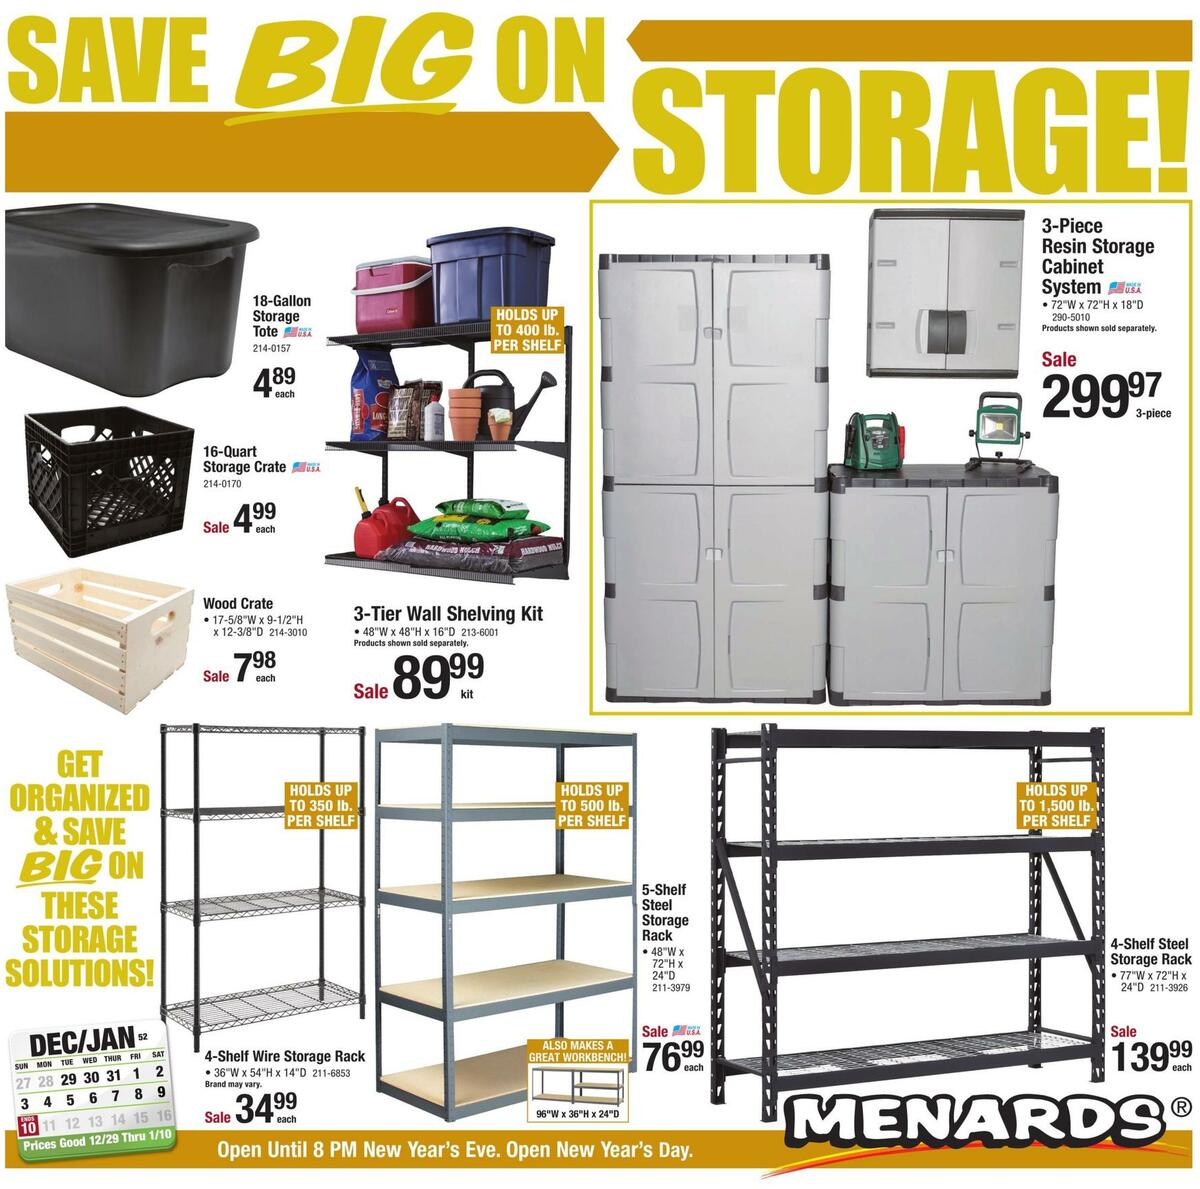 Menards Save Big on Storage! Weekly Ad from December 29